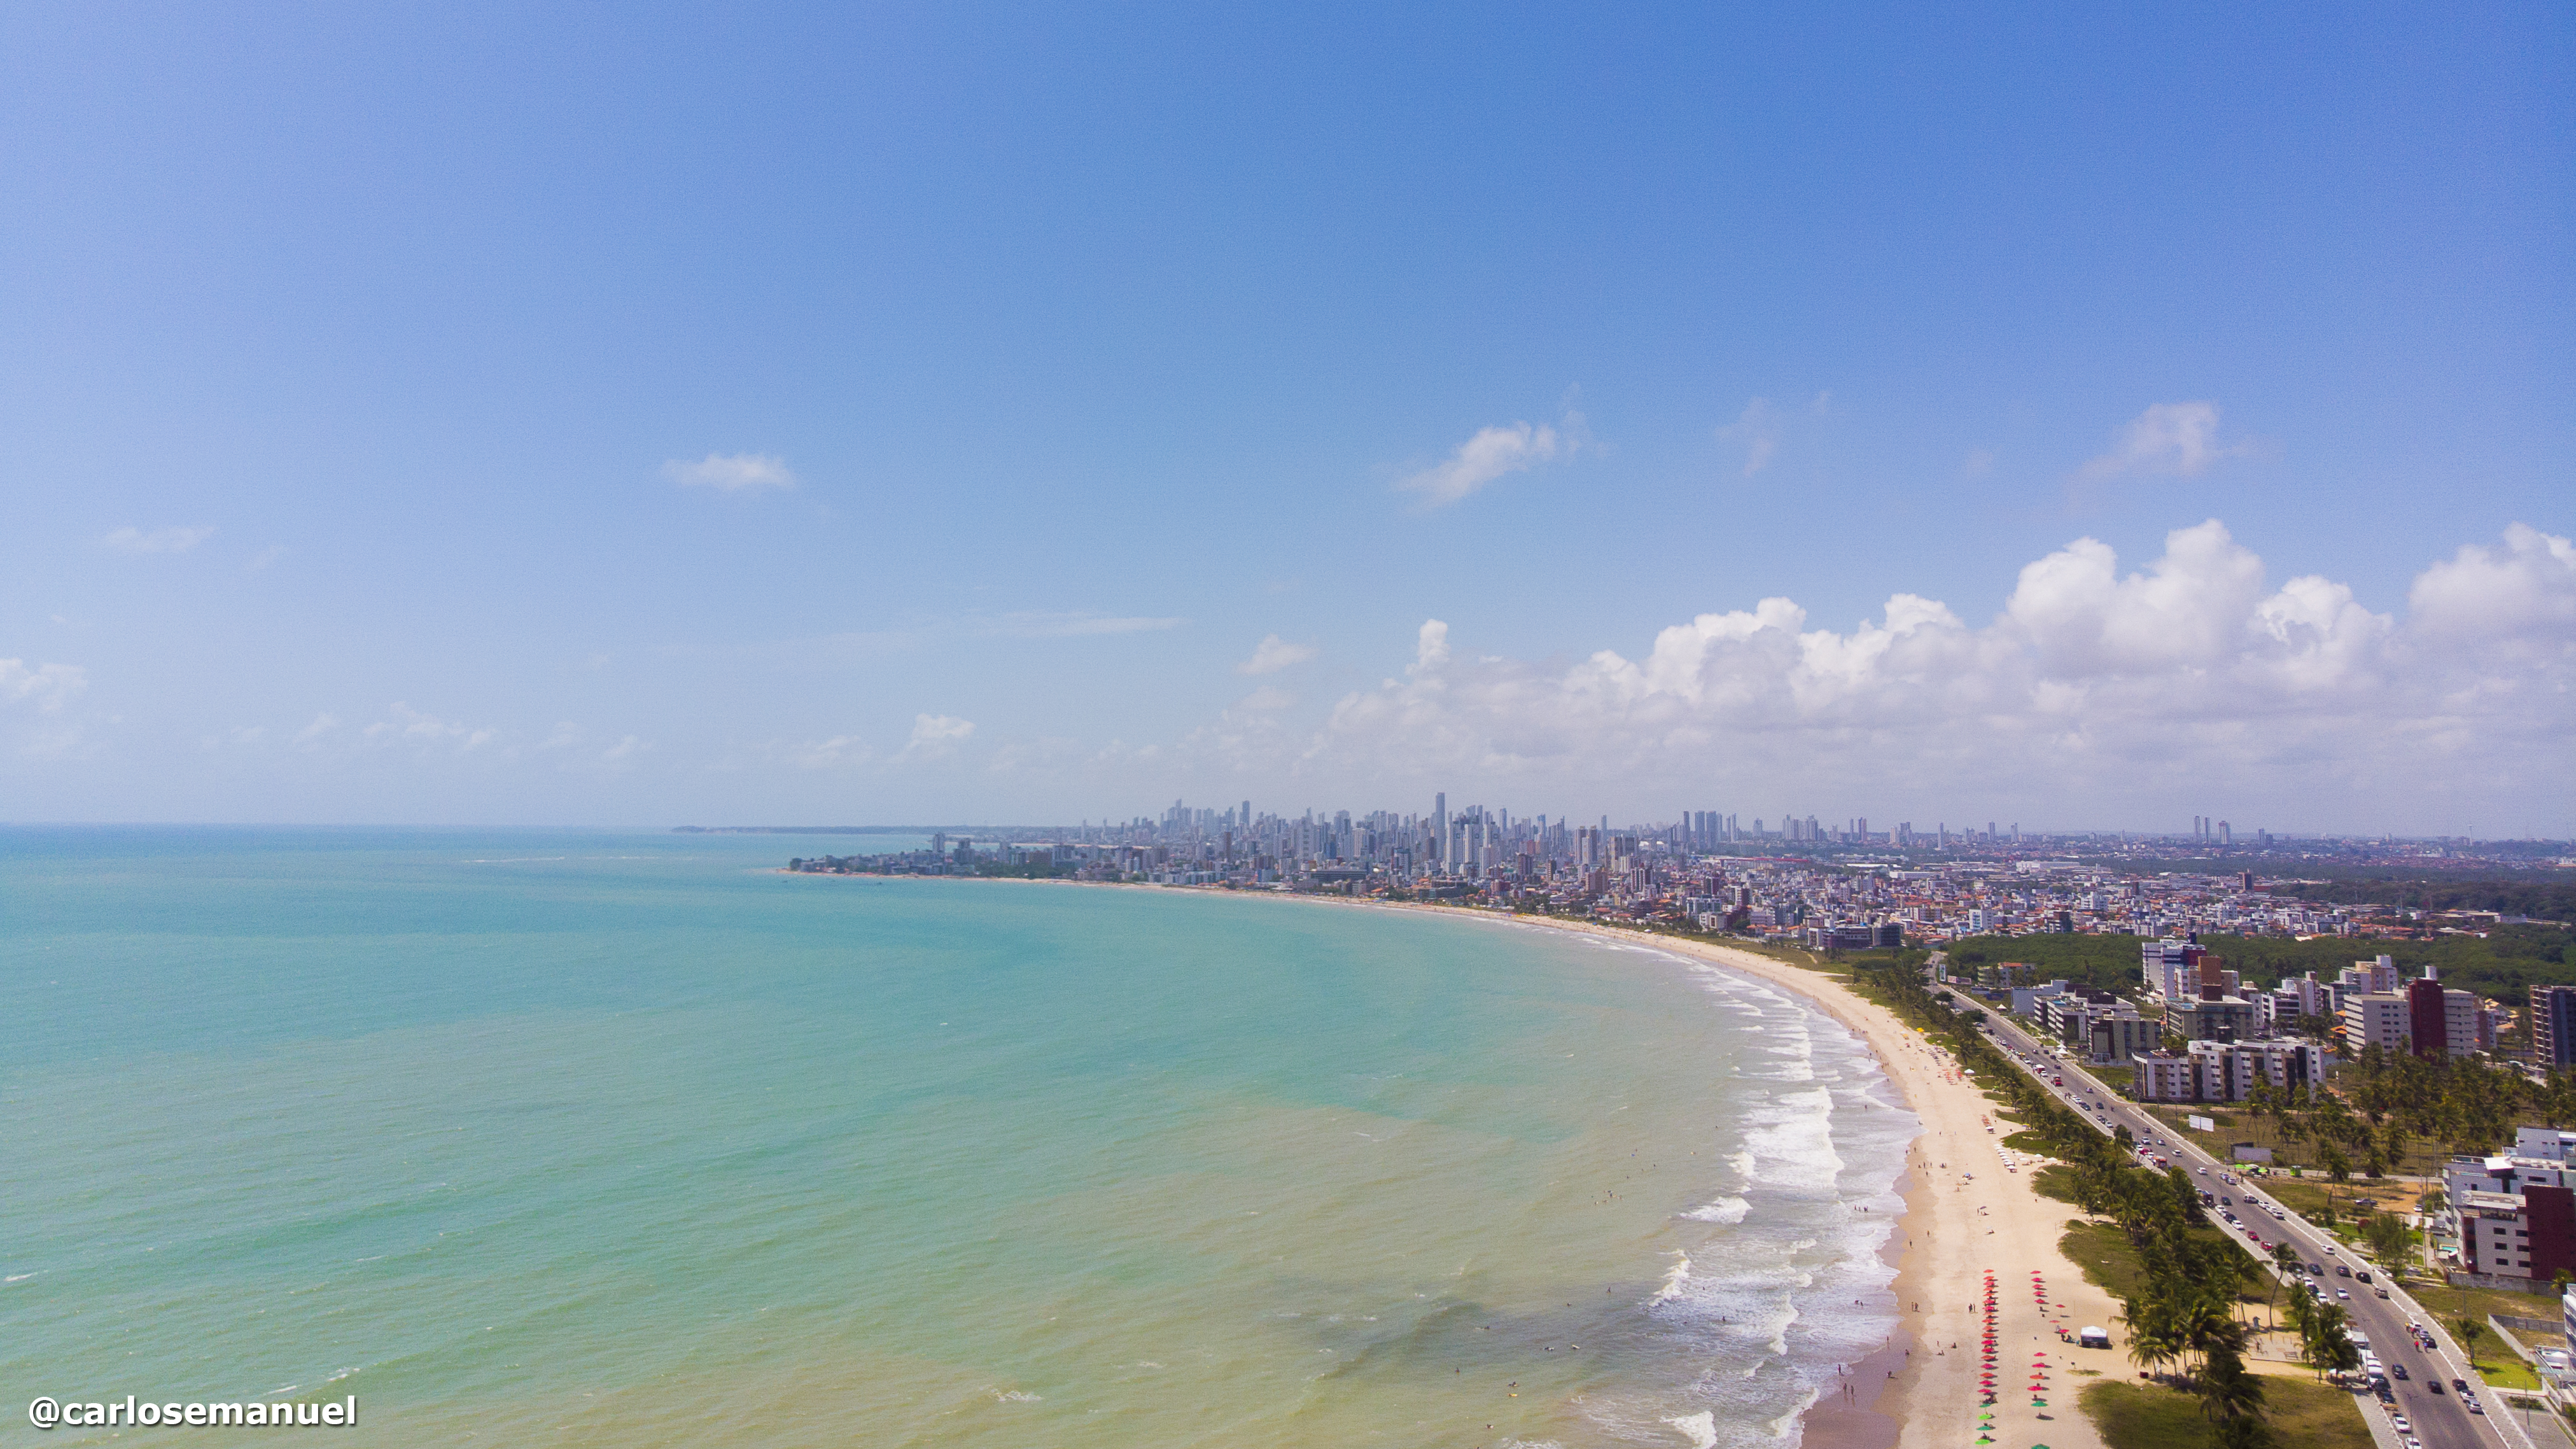 General 4048x2277 beach João Pessoa city landscape drone drone photo Paraíba Brazil watermarked aerial view sea